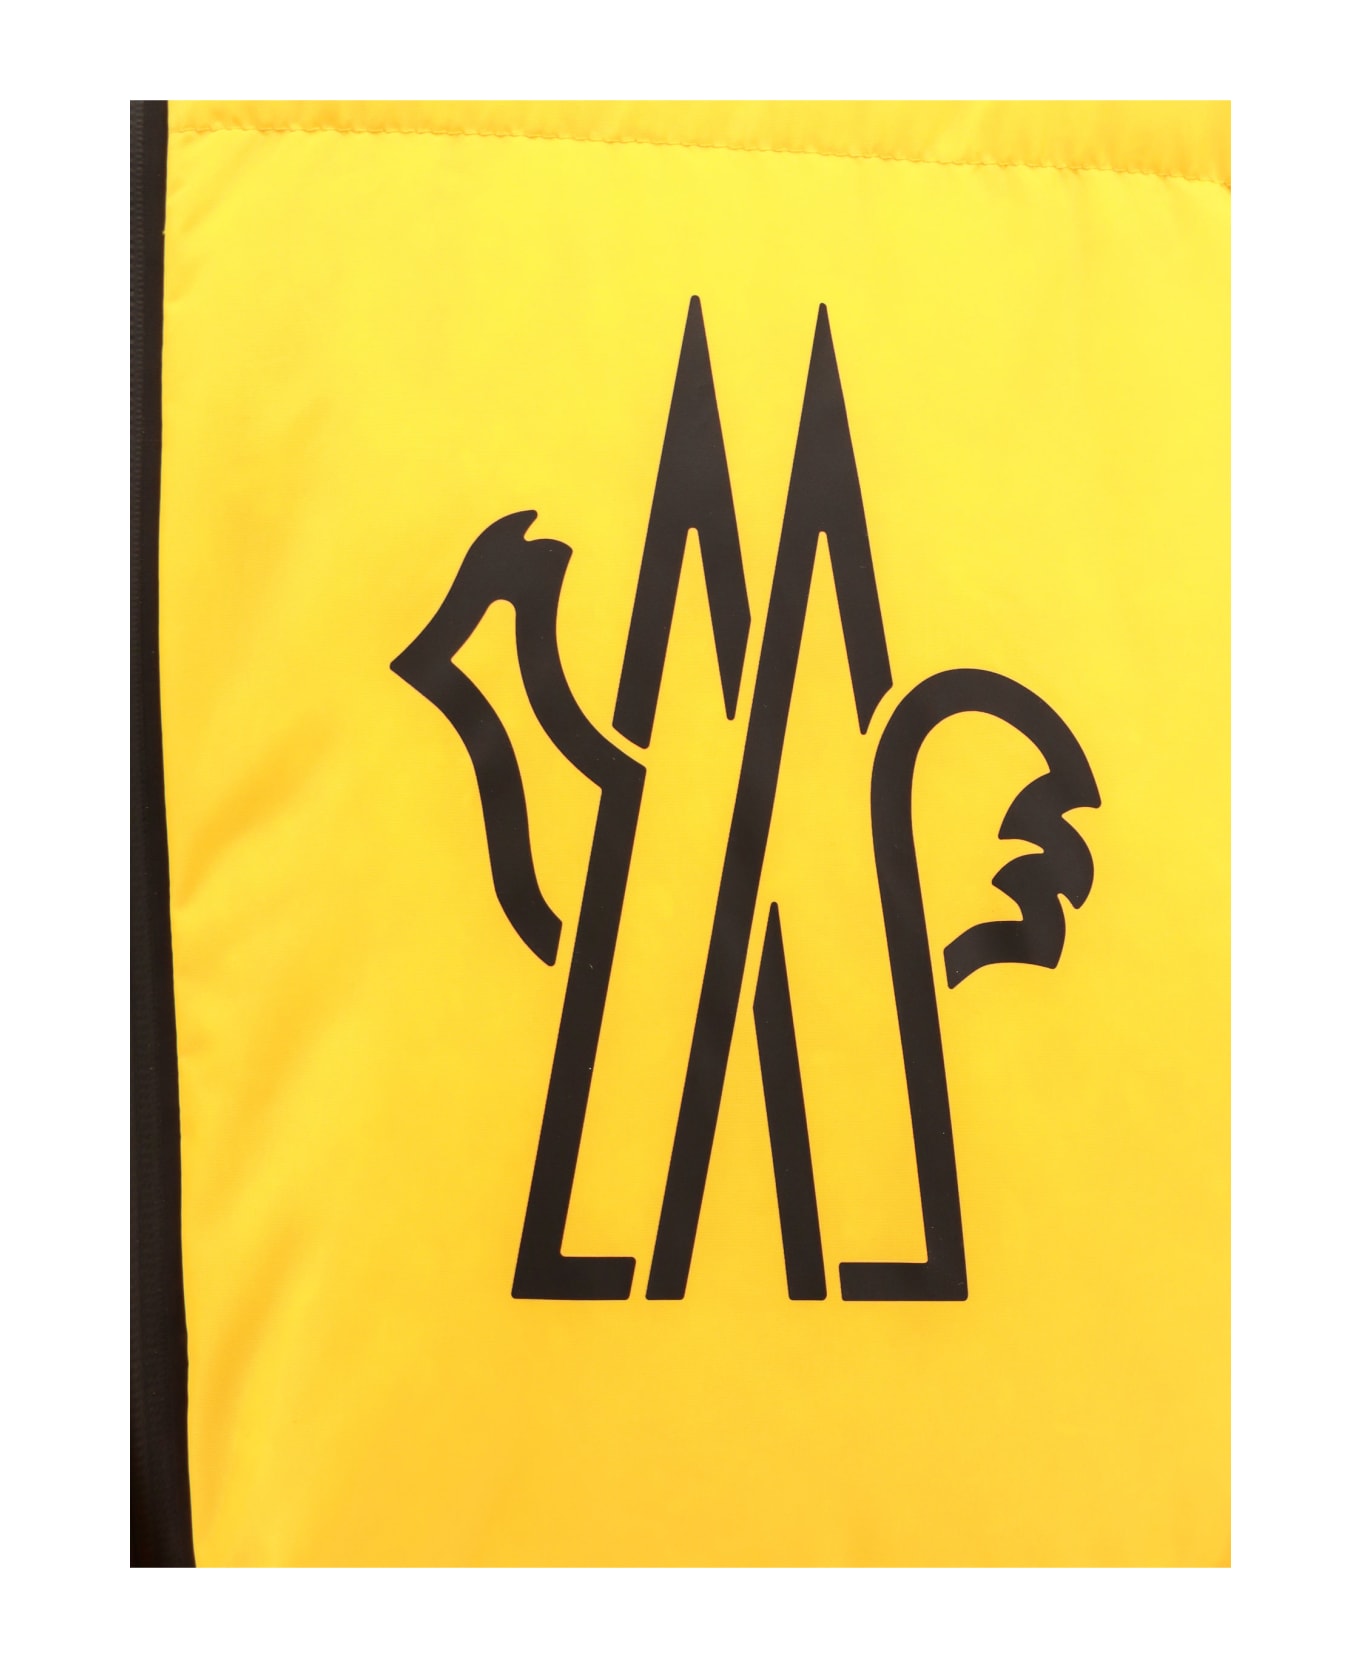 Moncler Grenoble Verdons Jacket - Yellow